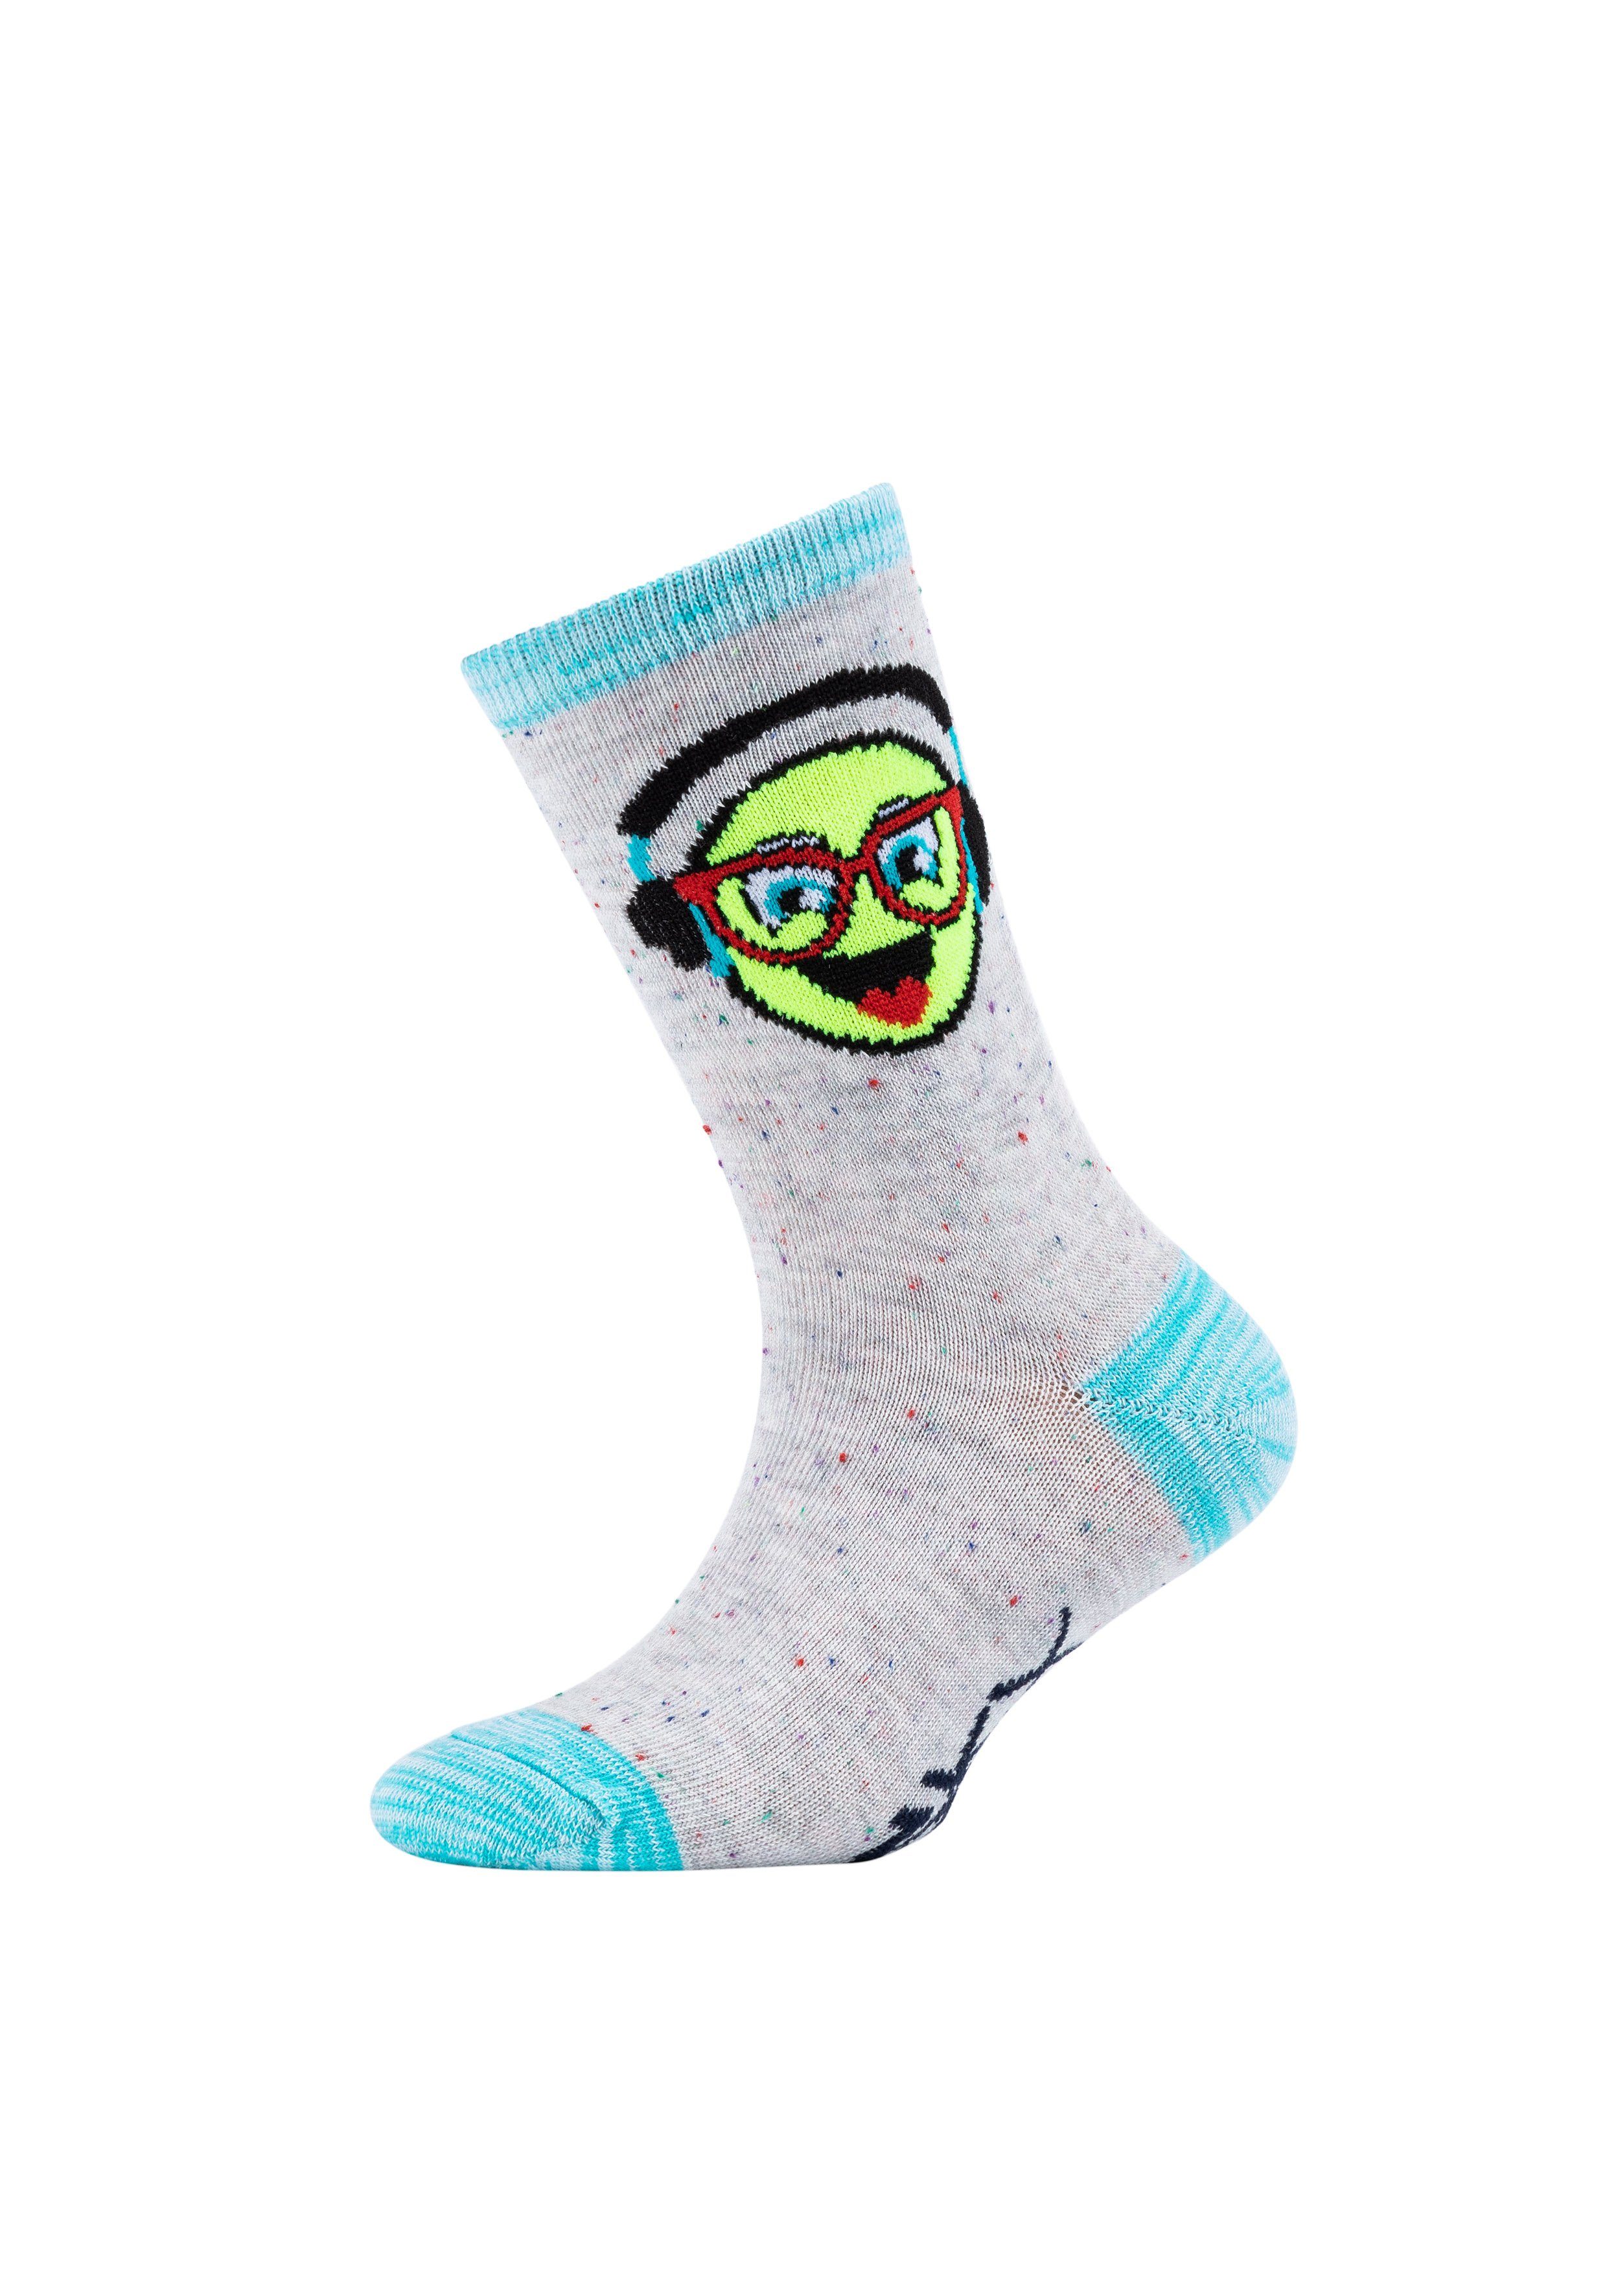 Socken im Space Casual Skechers & mit Smile Weltraum-Motiv (6-Paar) 6er-Pack